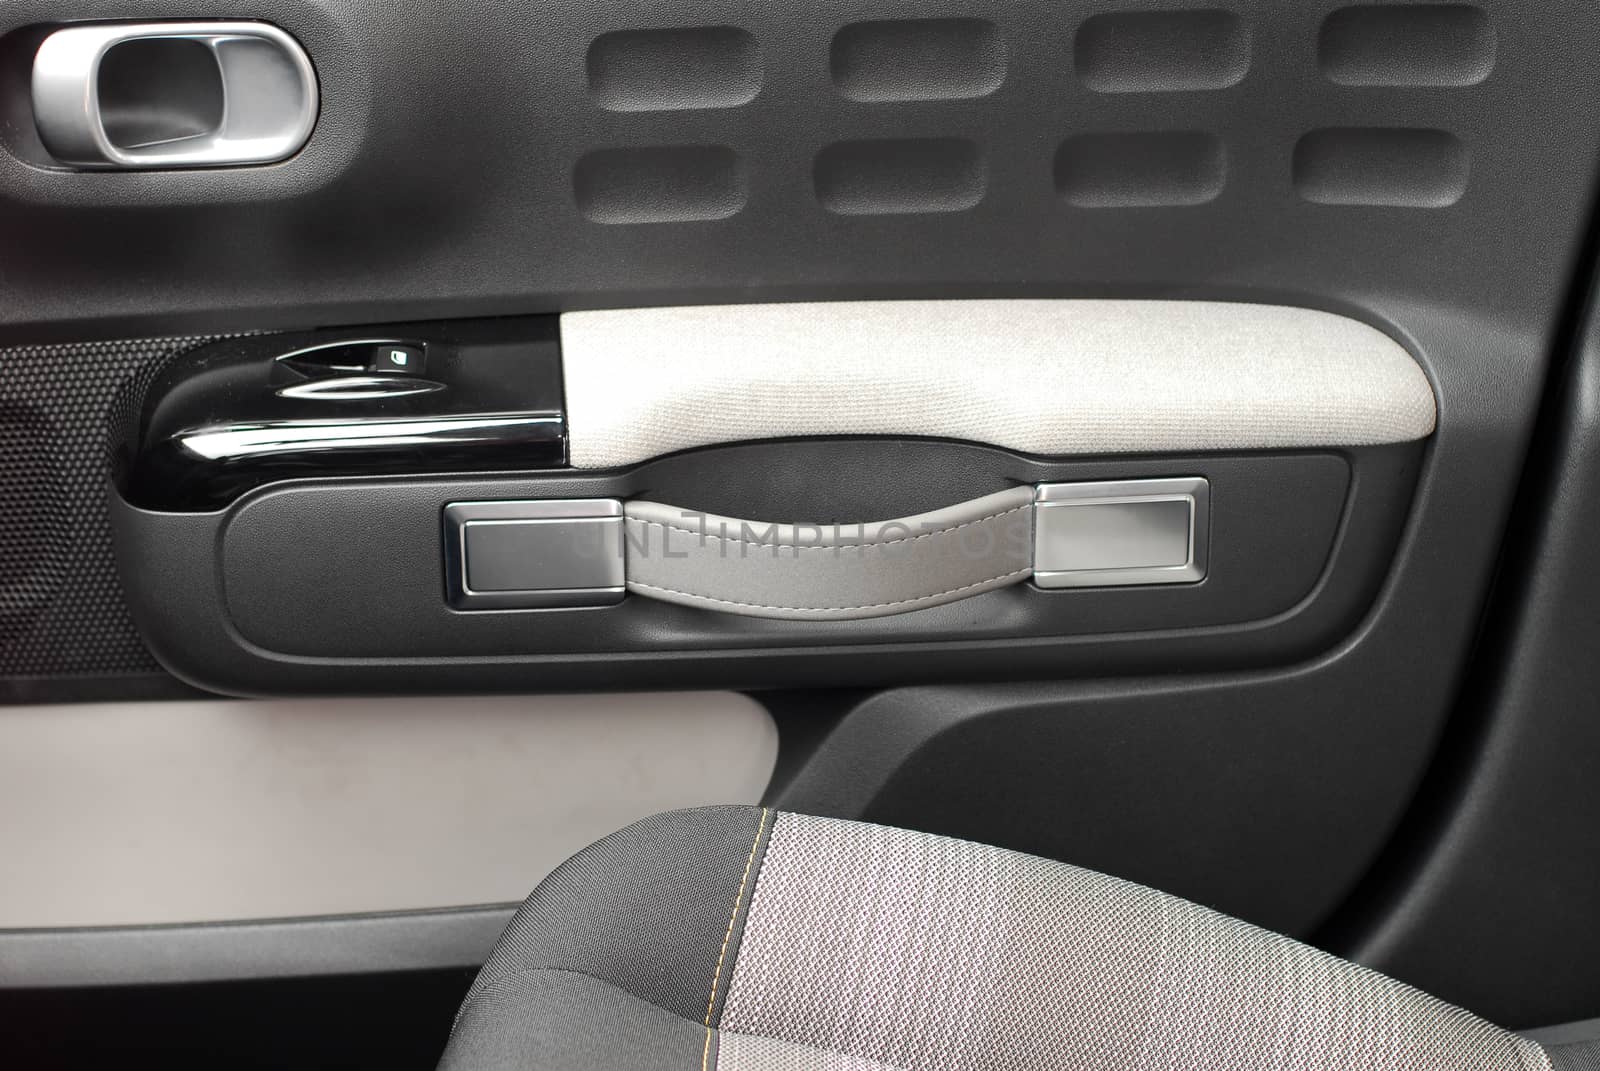 car door handles in modern passenger car